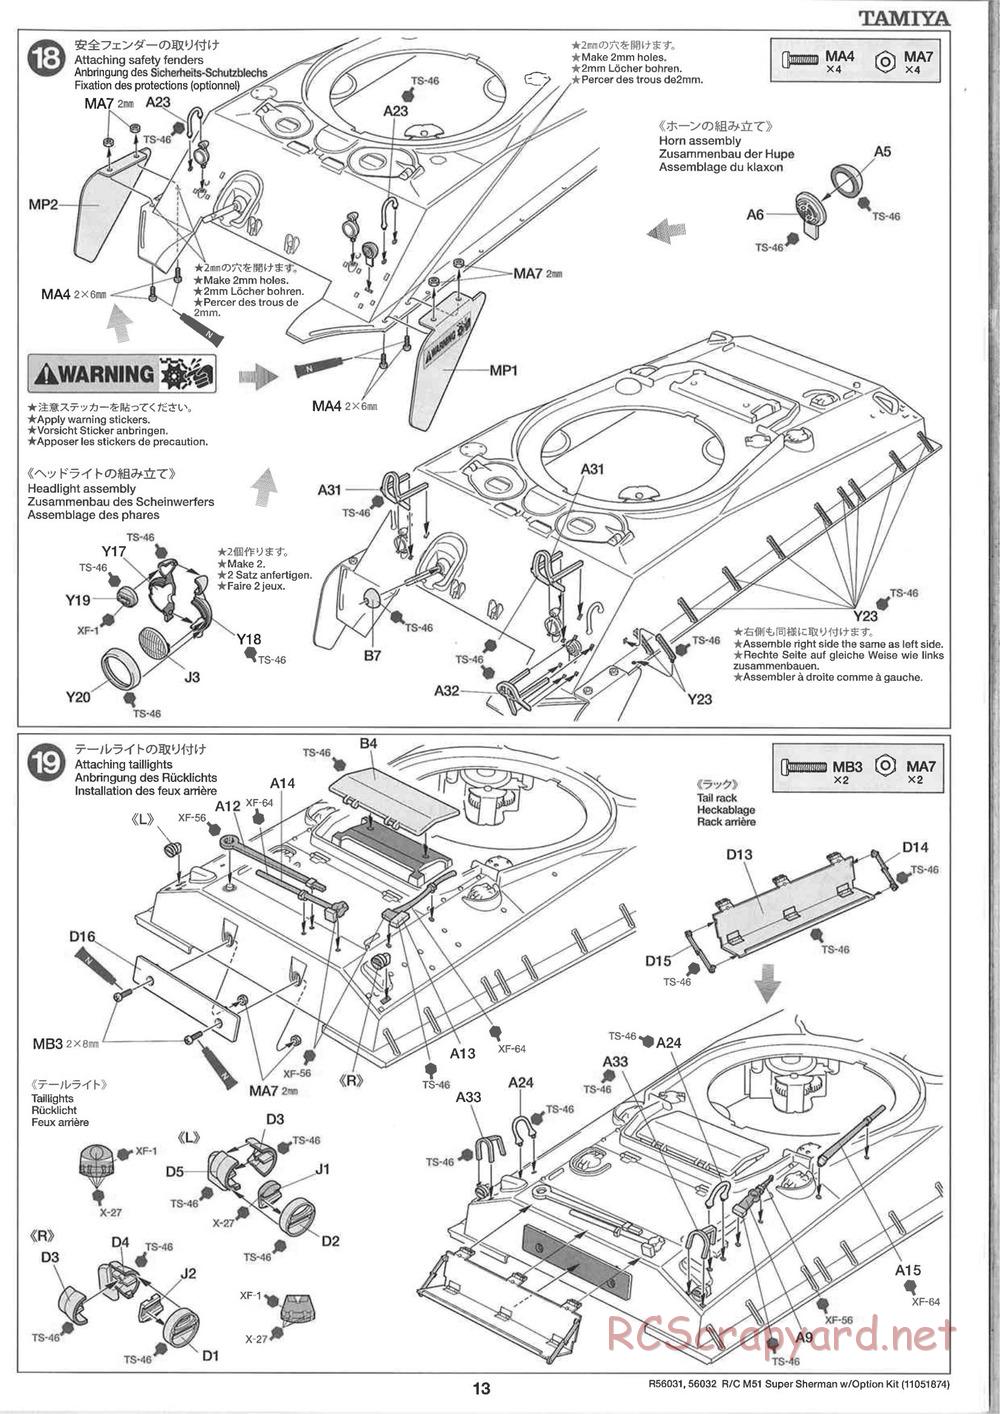 Tamiya - Super Sherman M-51 - 1/16 Scale Chassis - Manual - Page 13